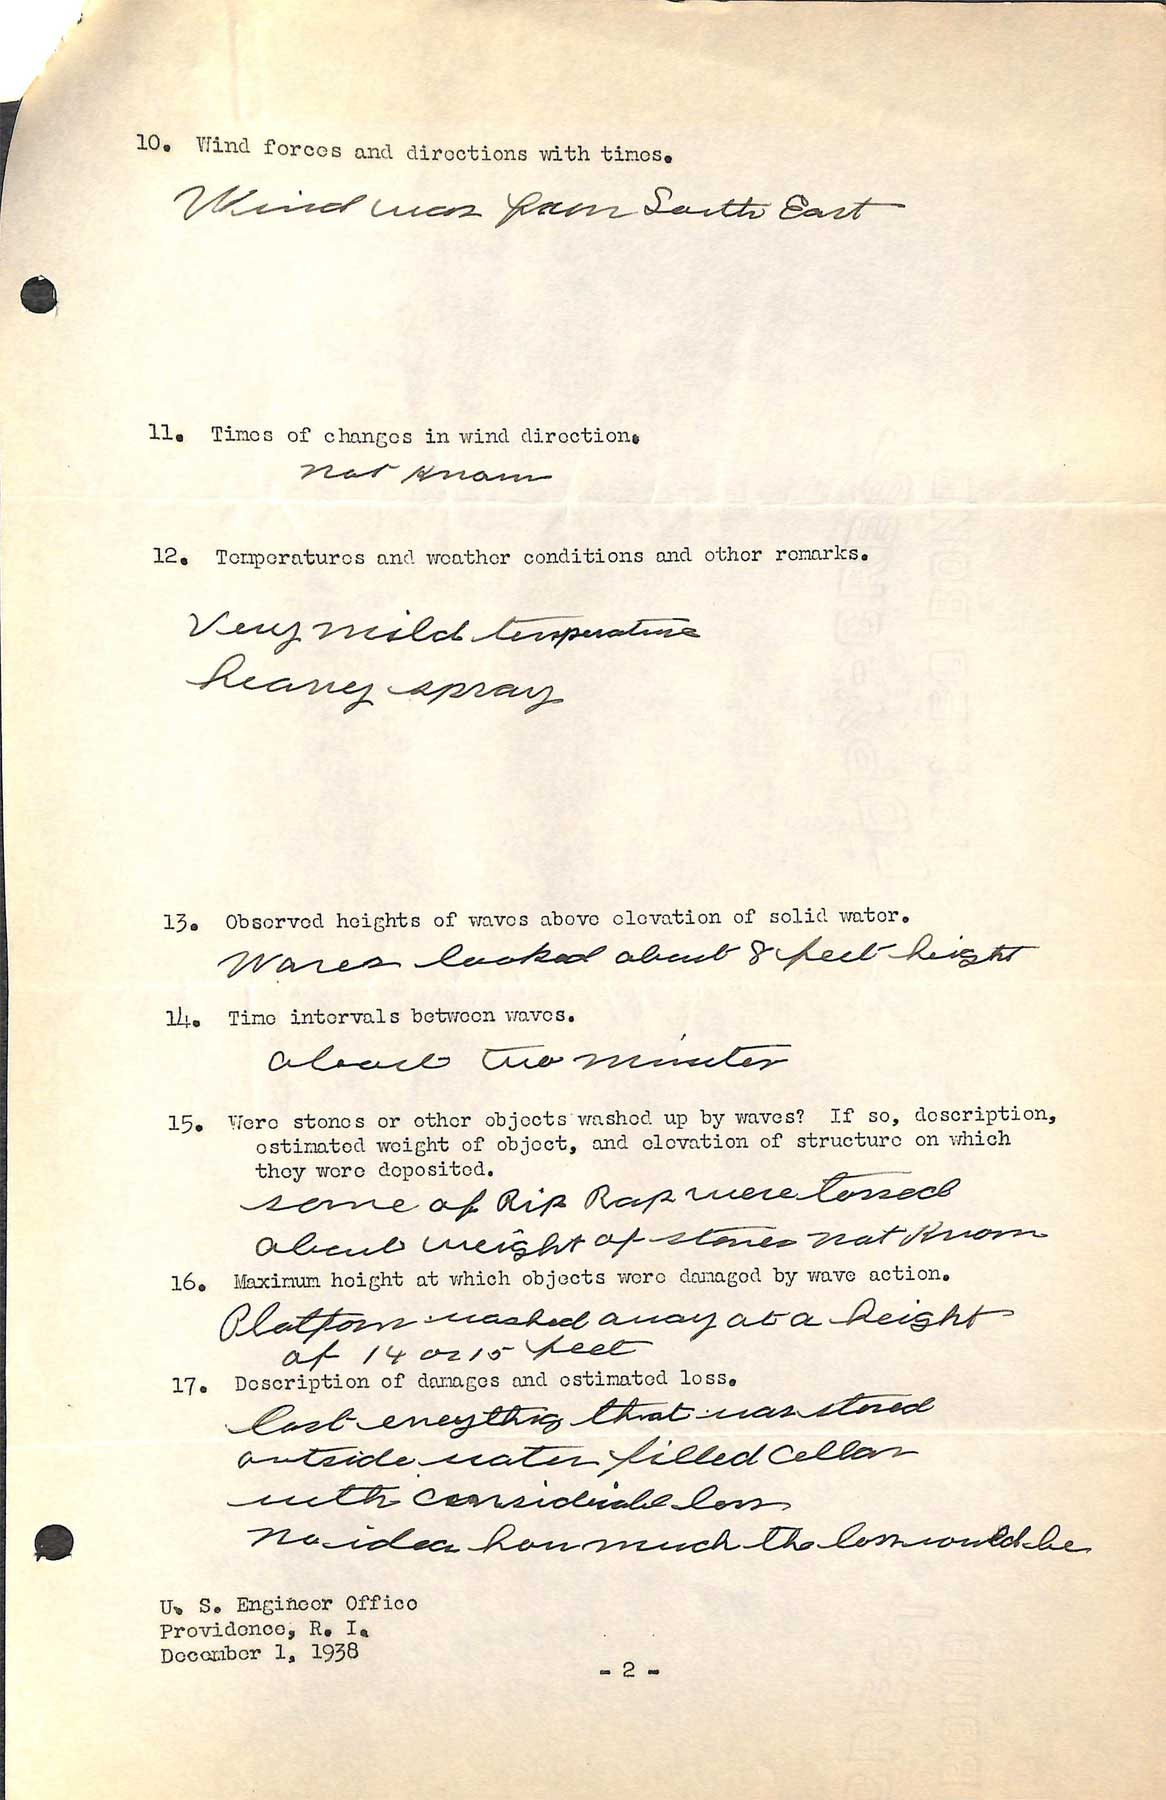 A questionnaire regarding the hurricane of September 21, 1938